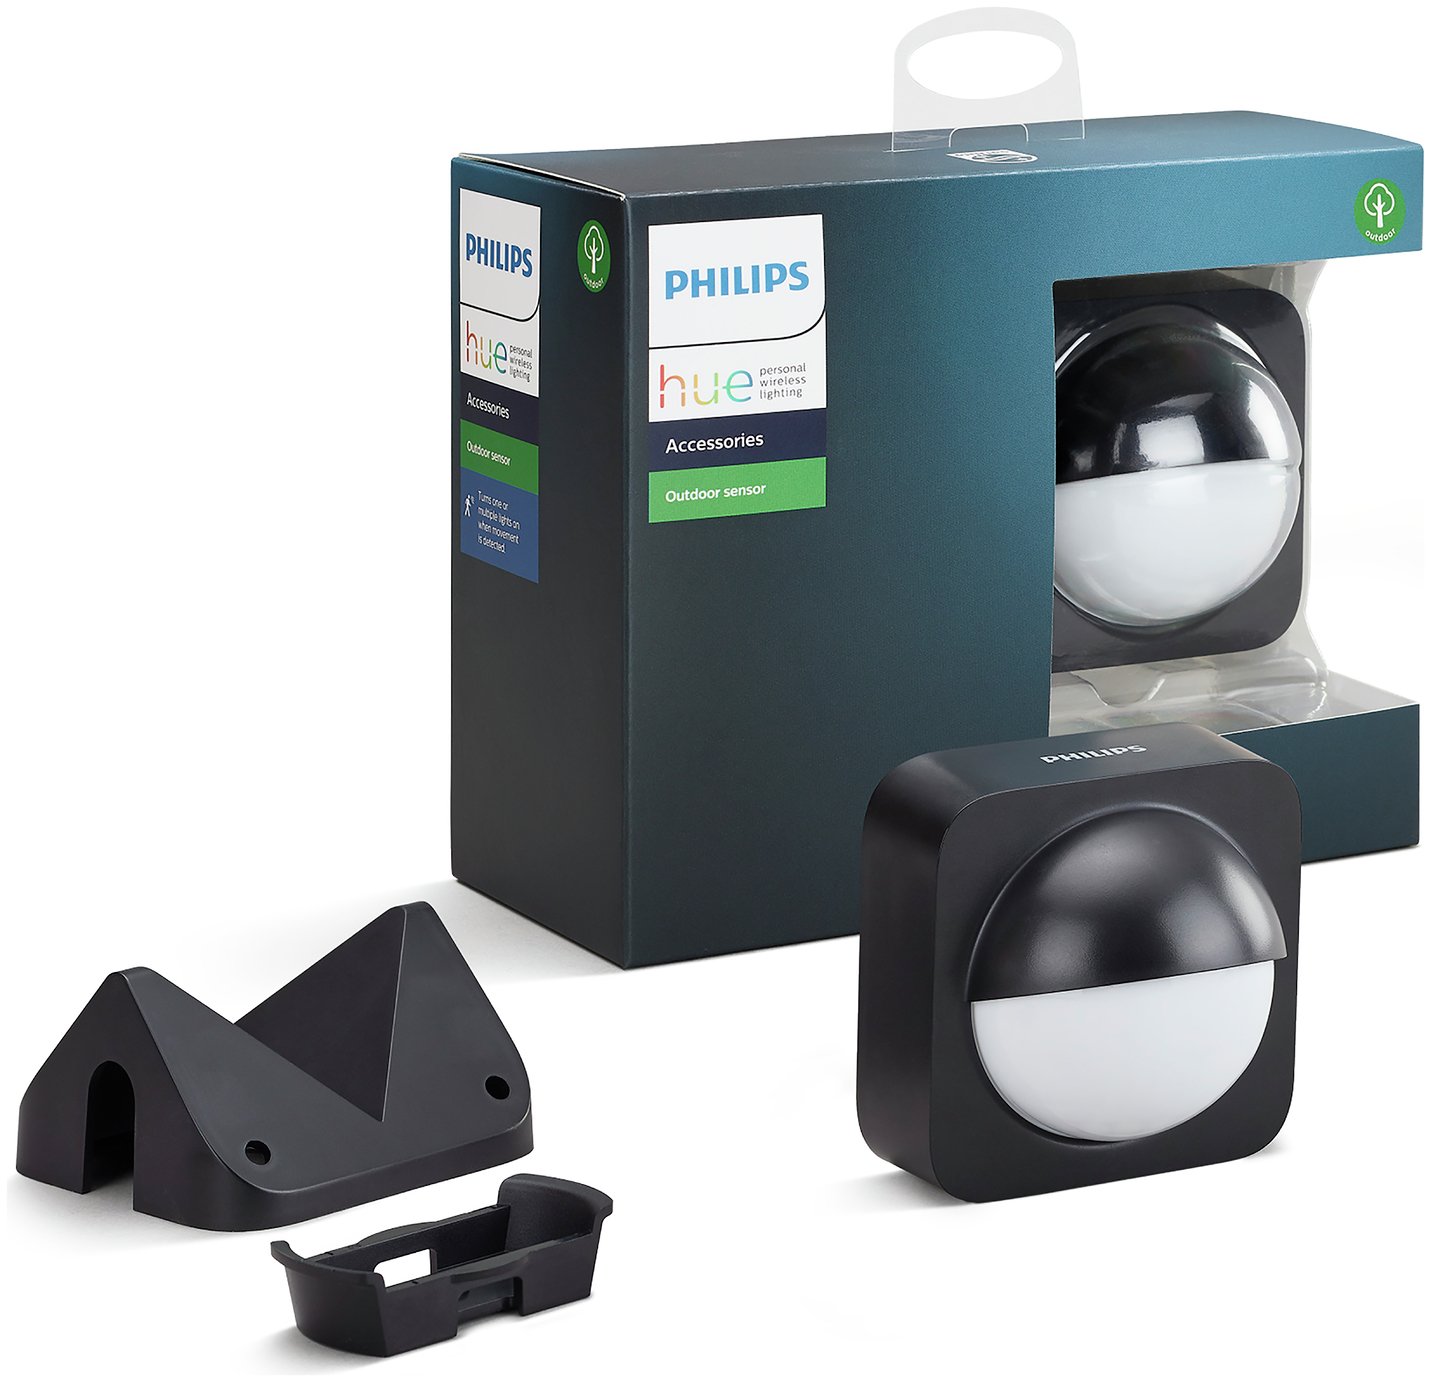 Philips Hue Outdoor Motion Sensor review